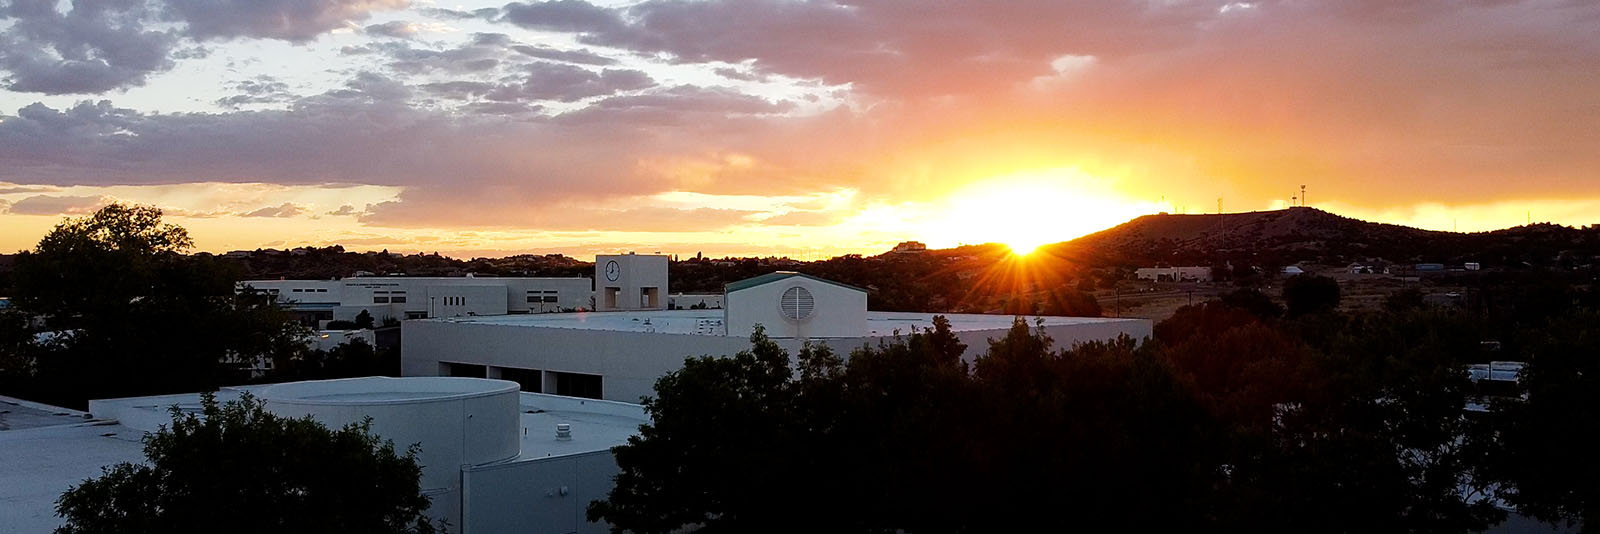 Sunset over San Juan College Campus